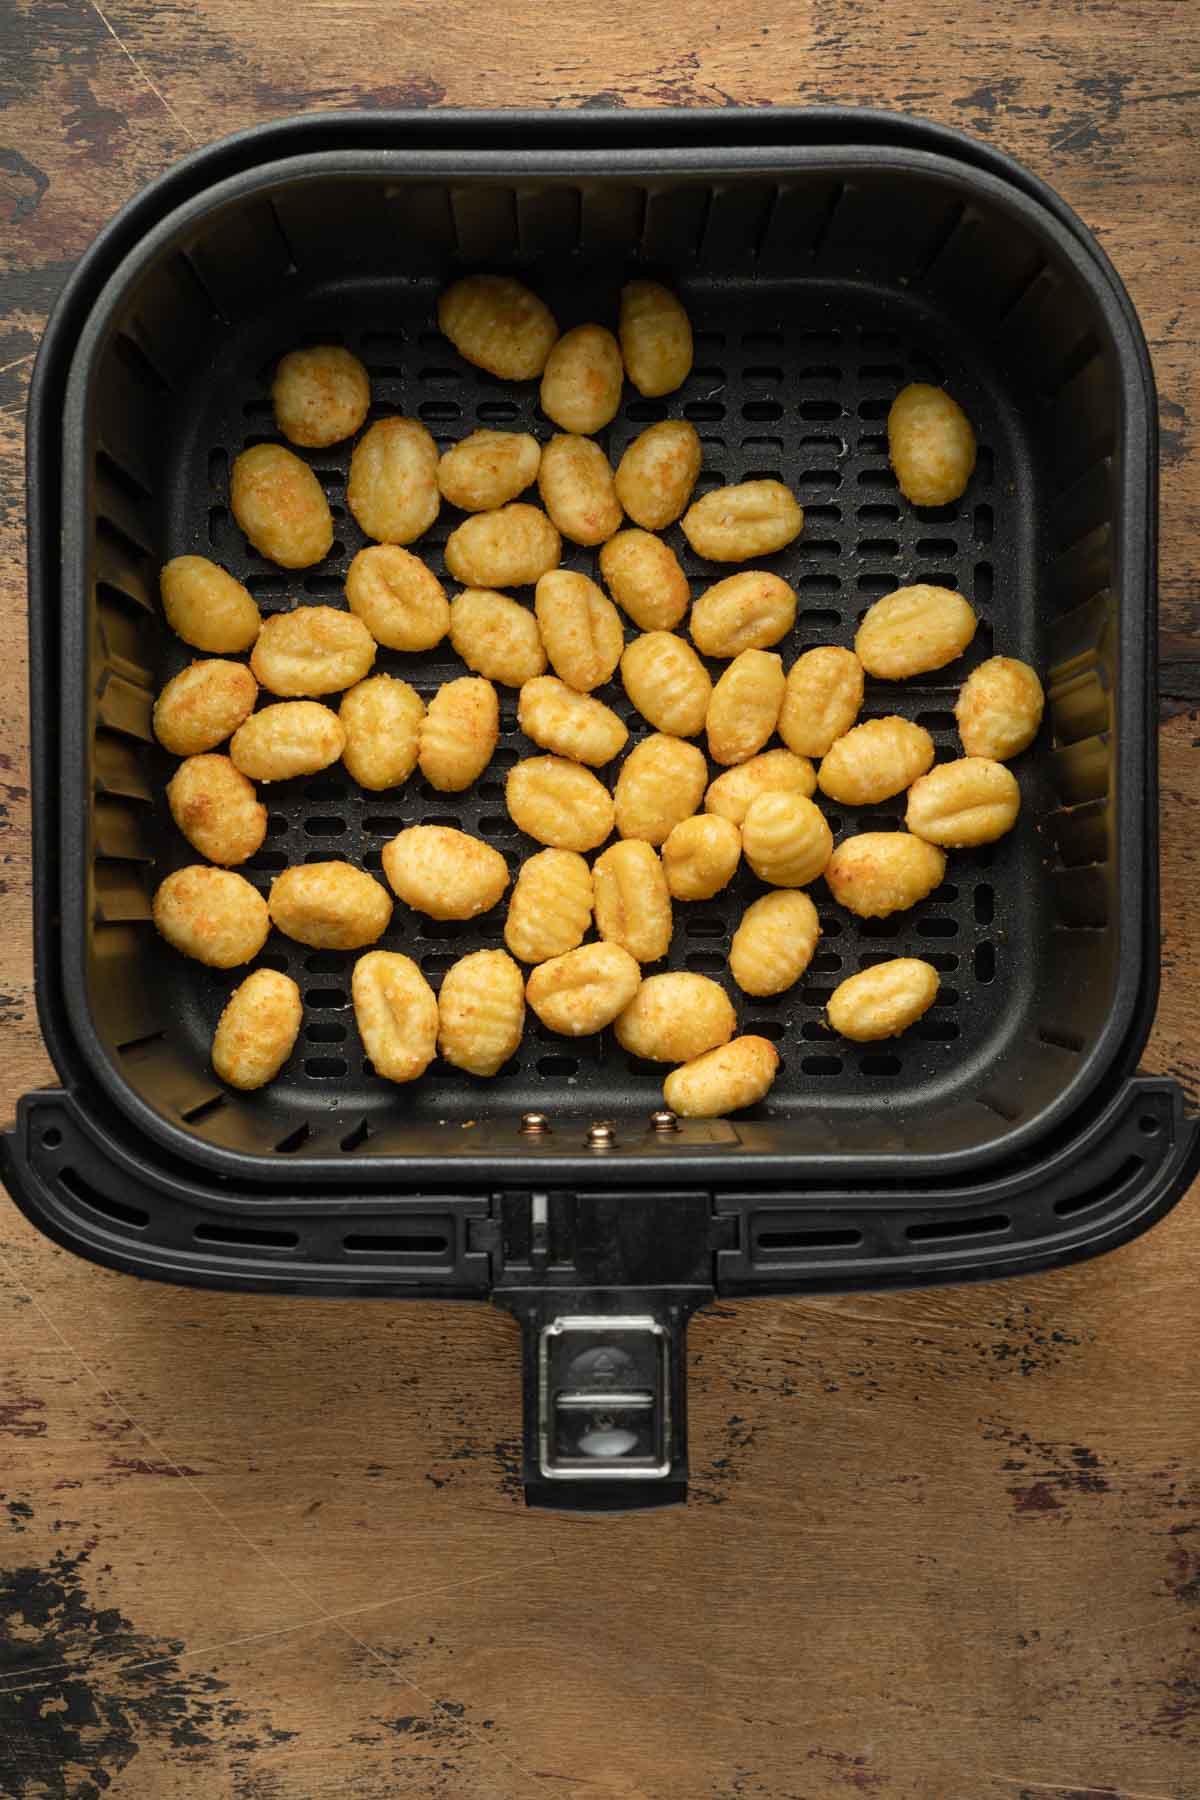 Air fried gnocchi in an air fryer basket.